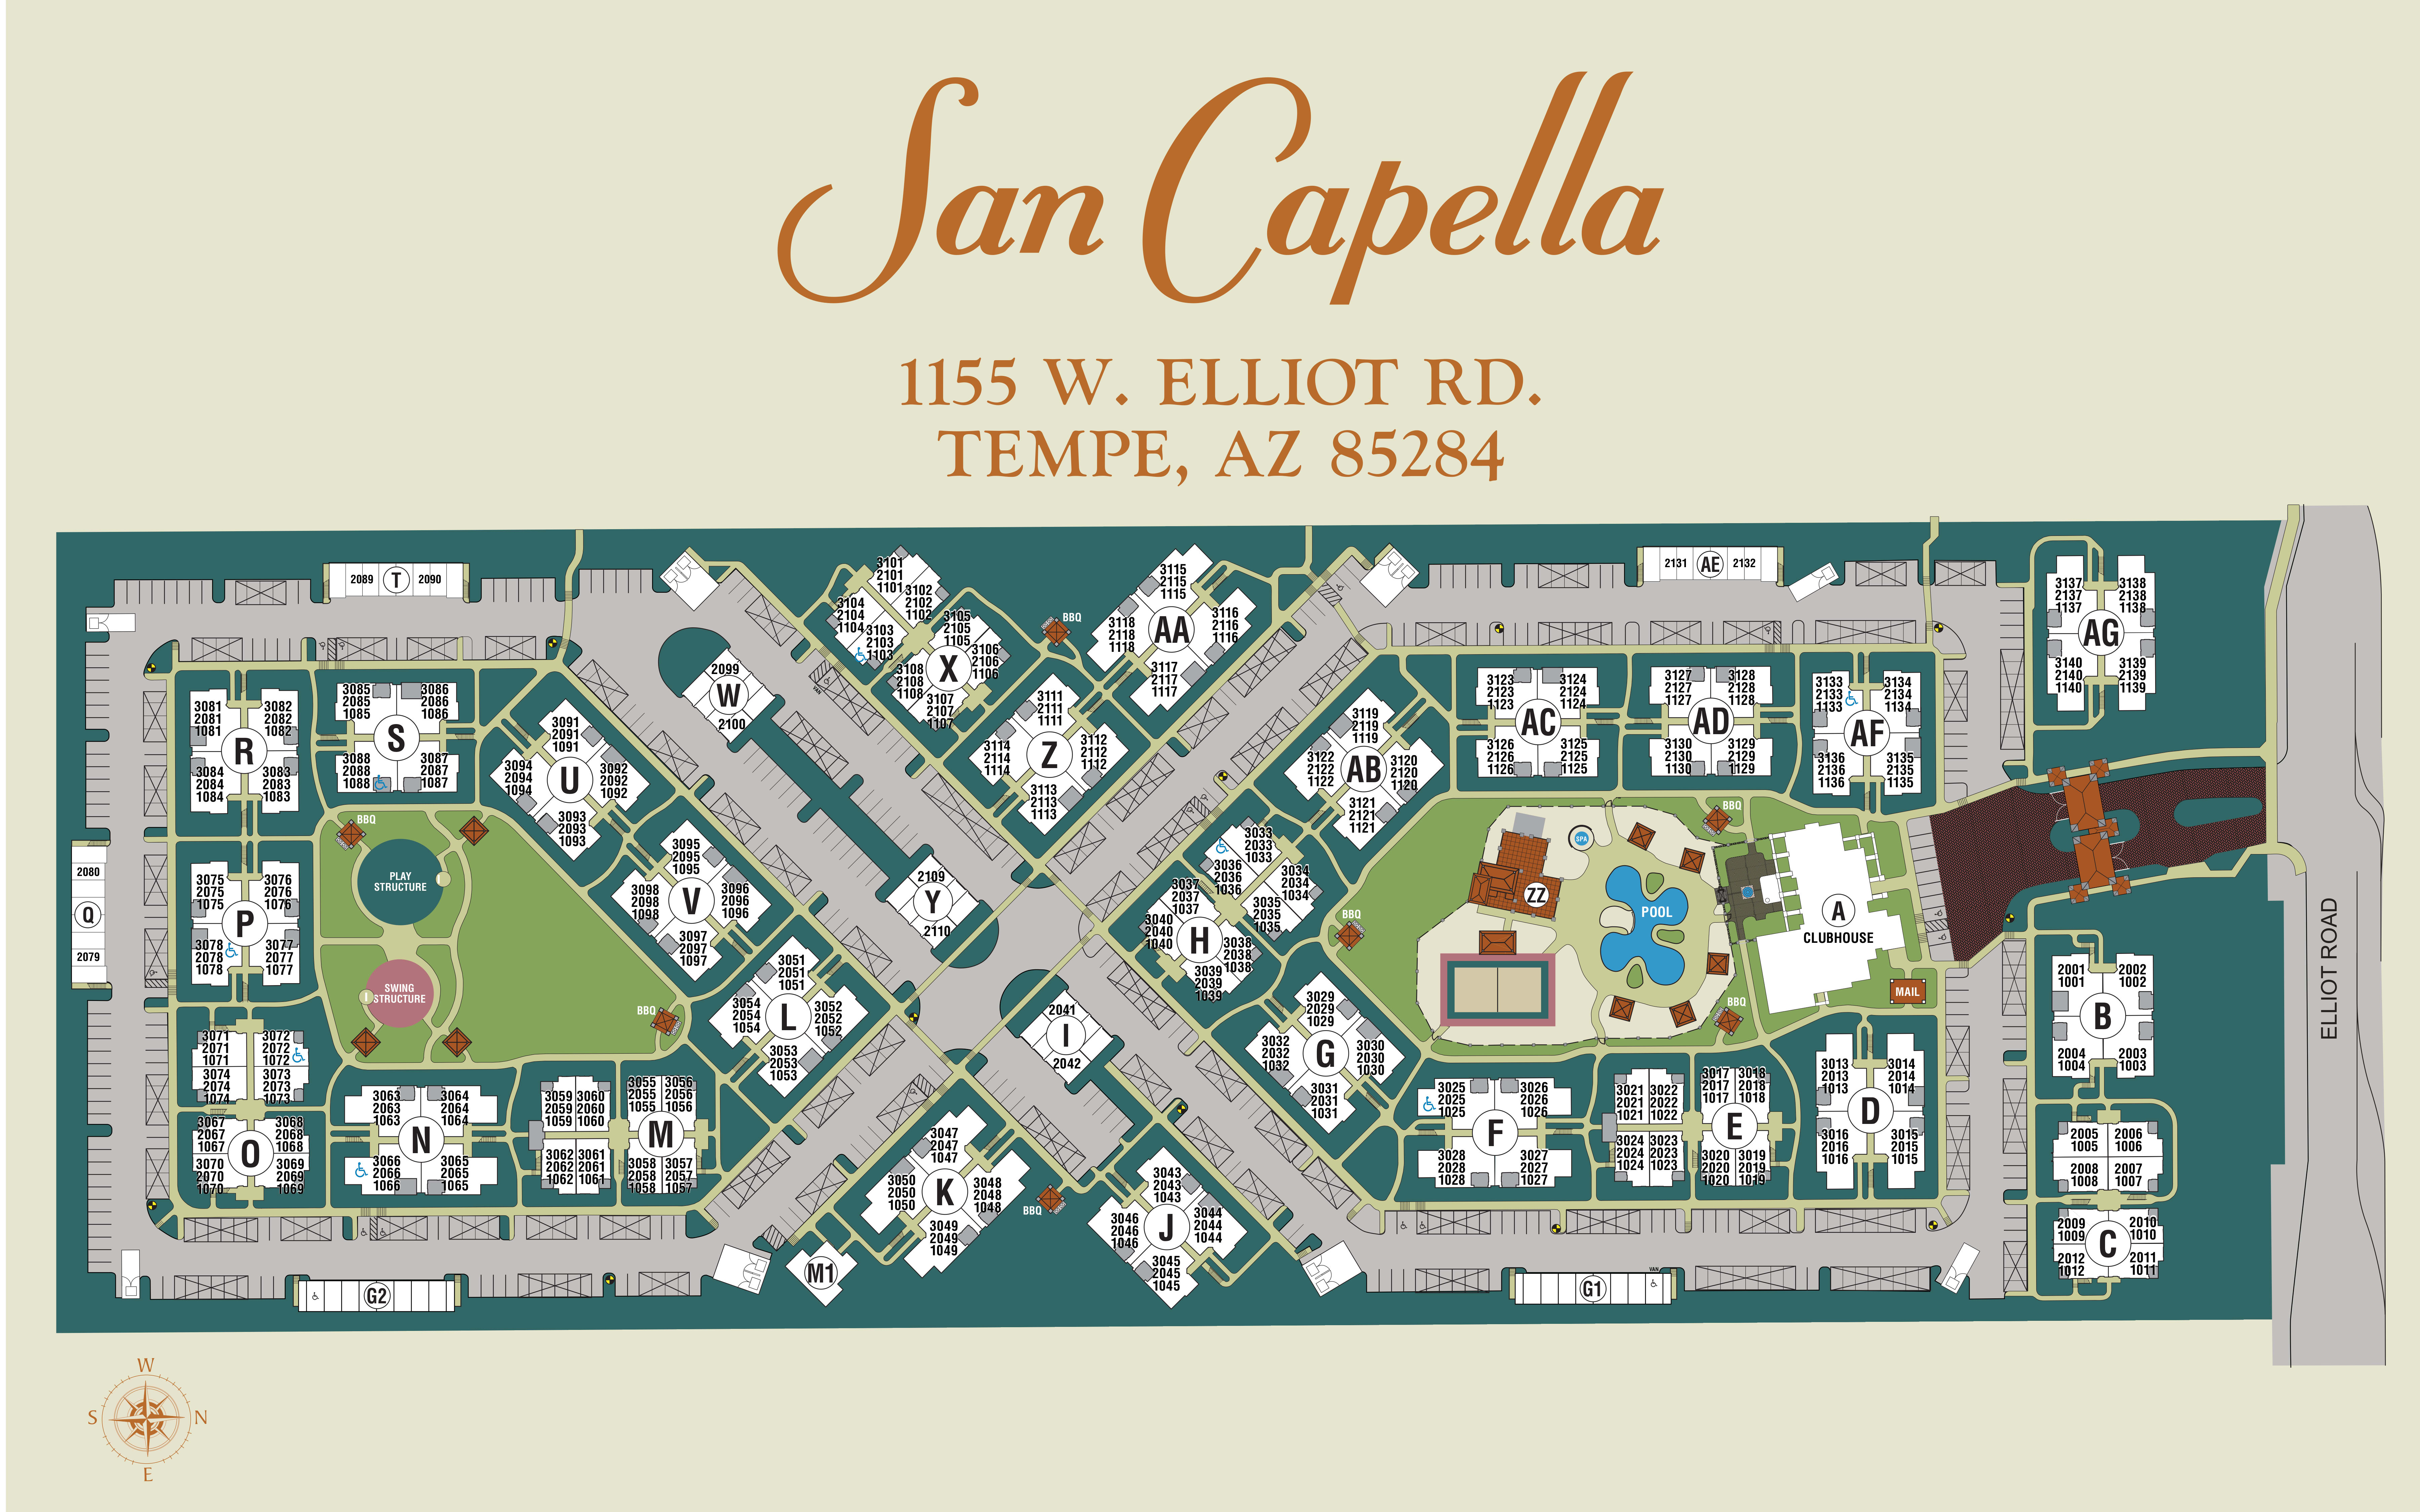 San Capella site plan